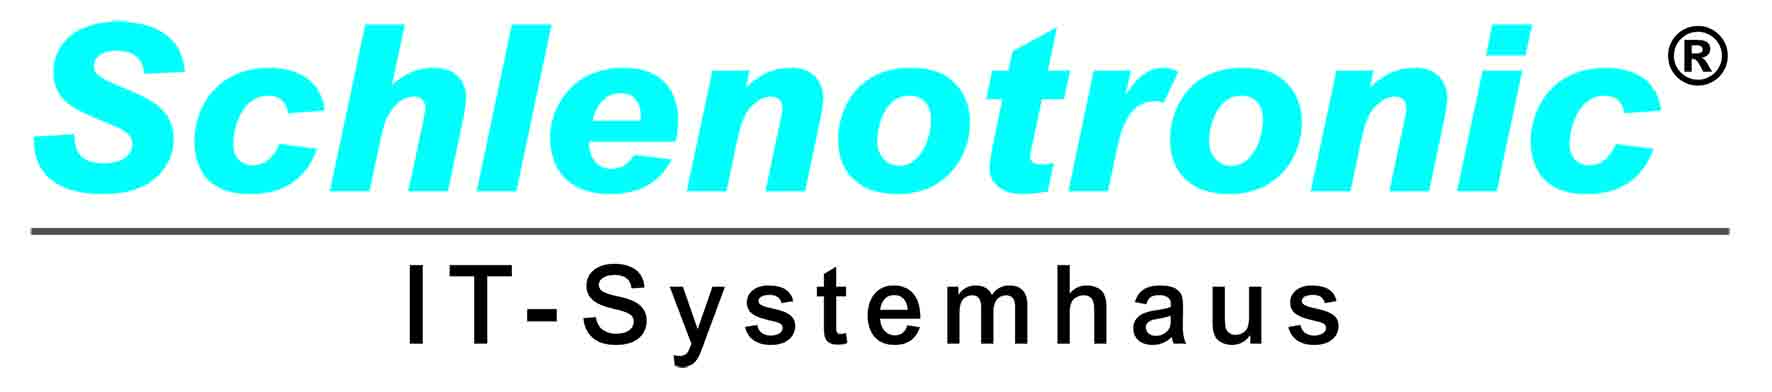 Schlenotronic-Logo.jpg